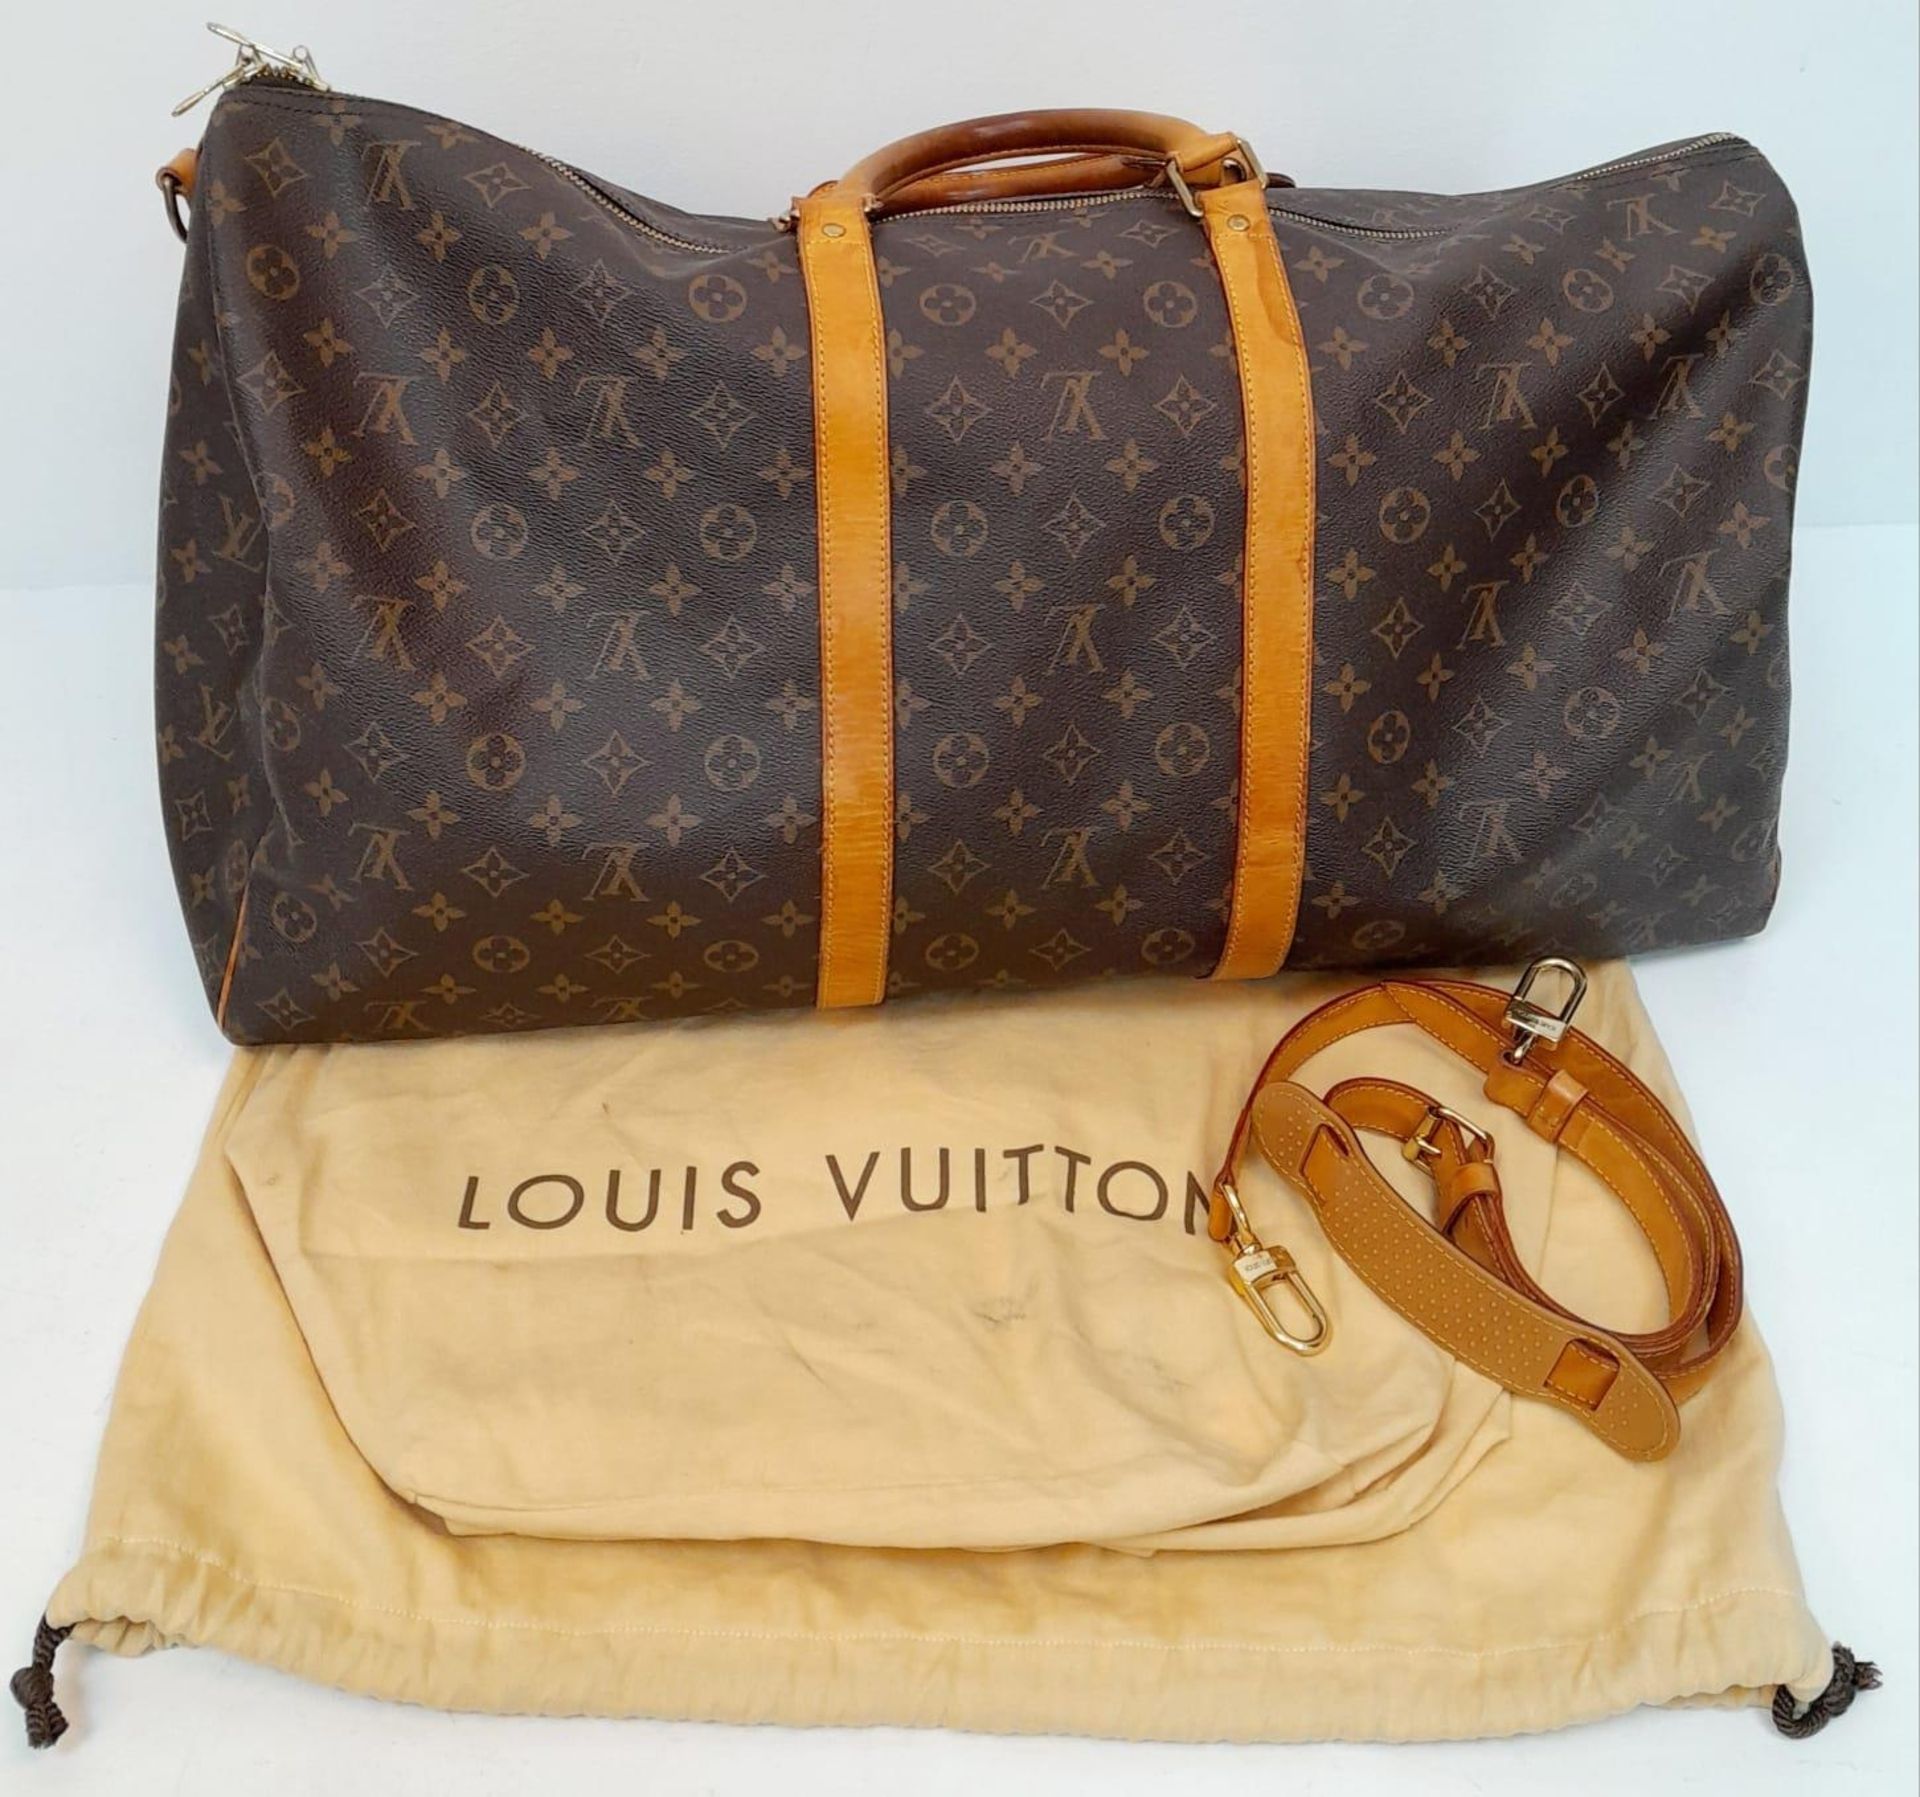 A Large Louis Vuitton Keepall Travel Bag. Monogram LV canvas exterior with cowhide leather handles - Bild 6 aus 8